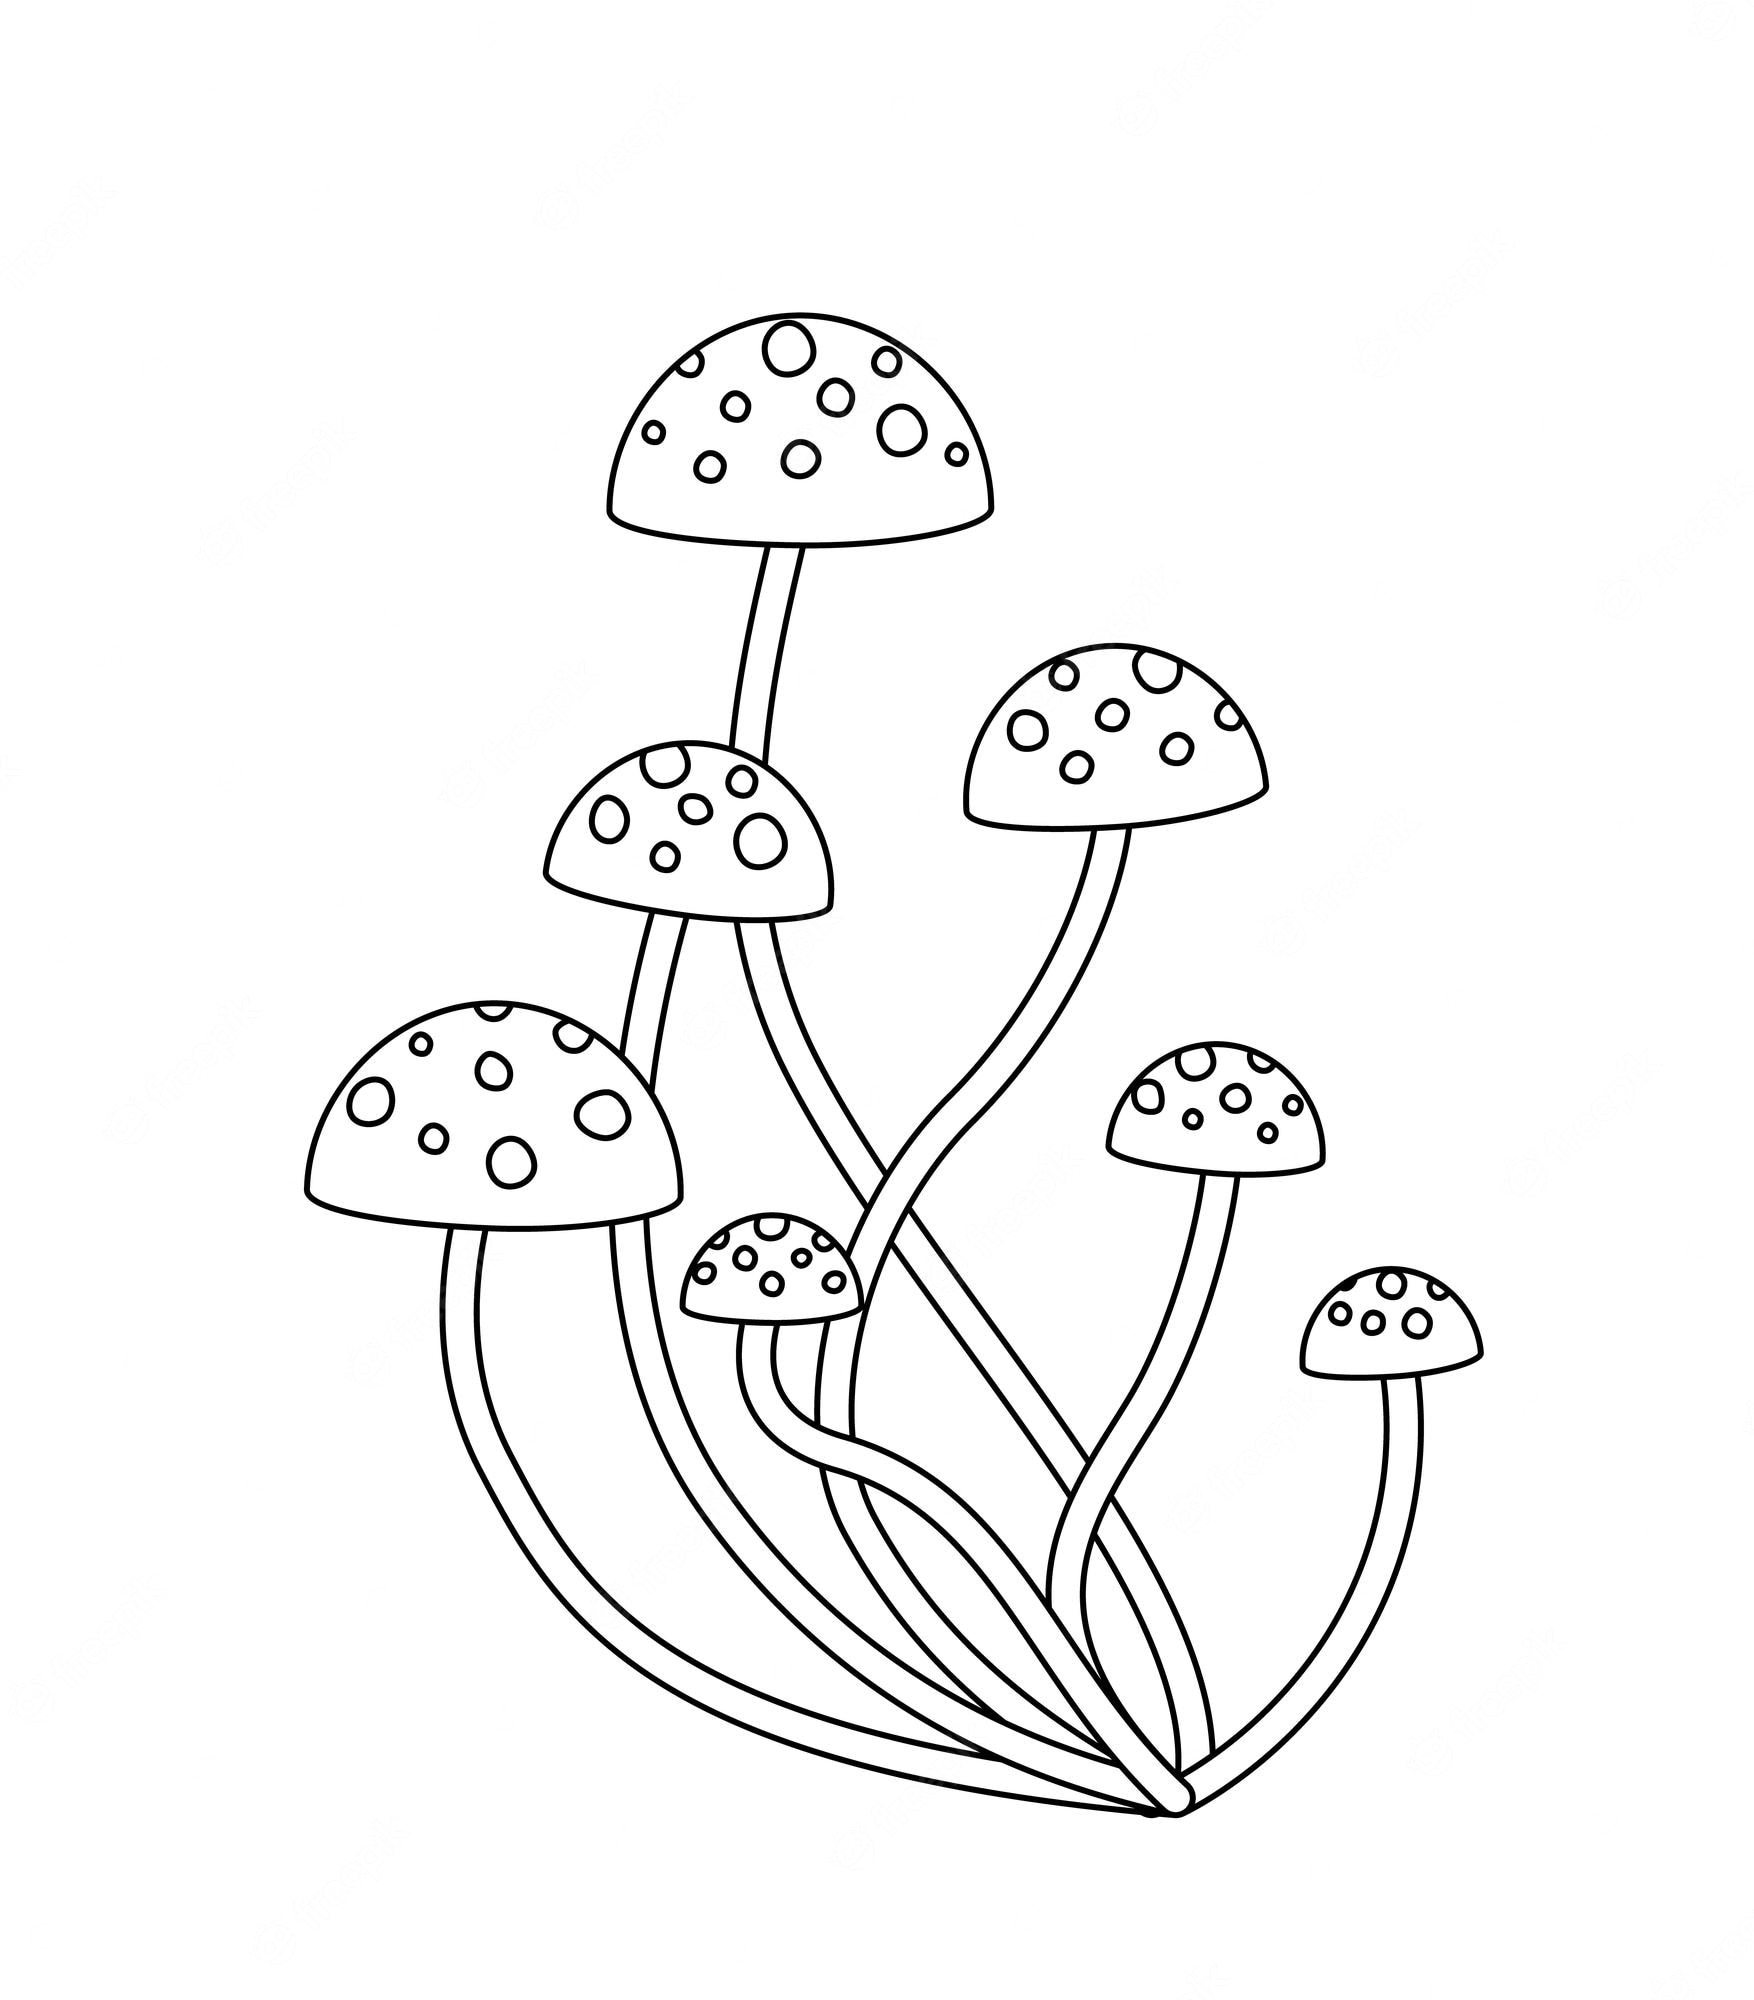 Premium Vector | Mushrooms coloring page black and white toxic mushroom  vector